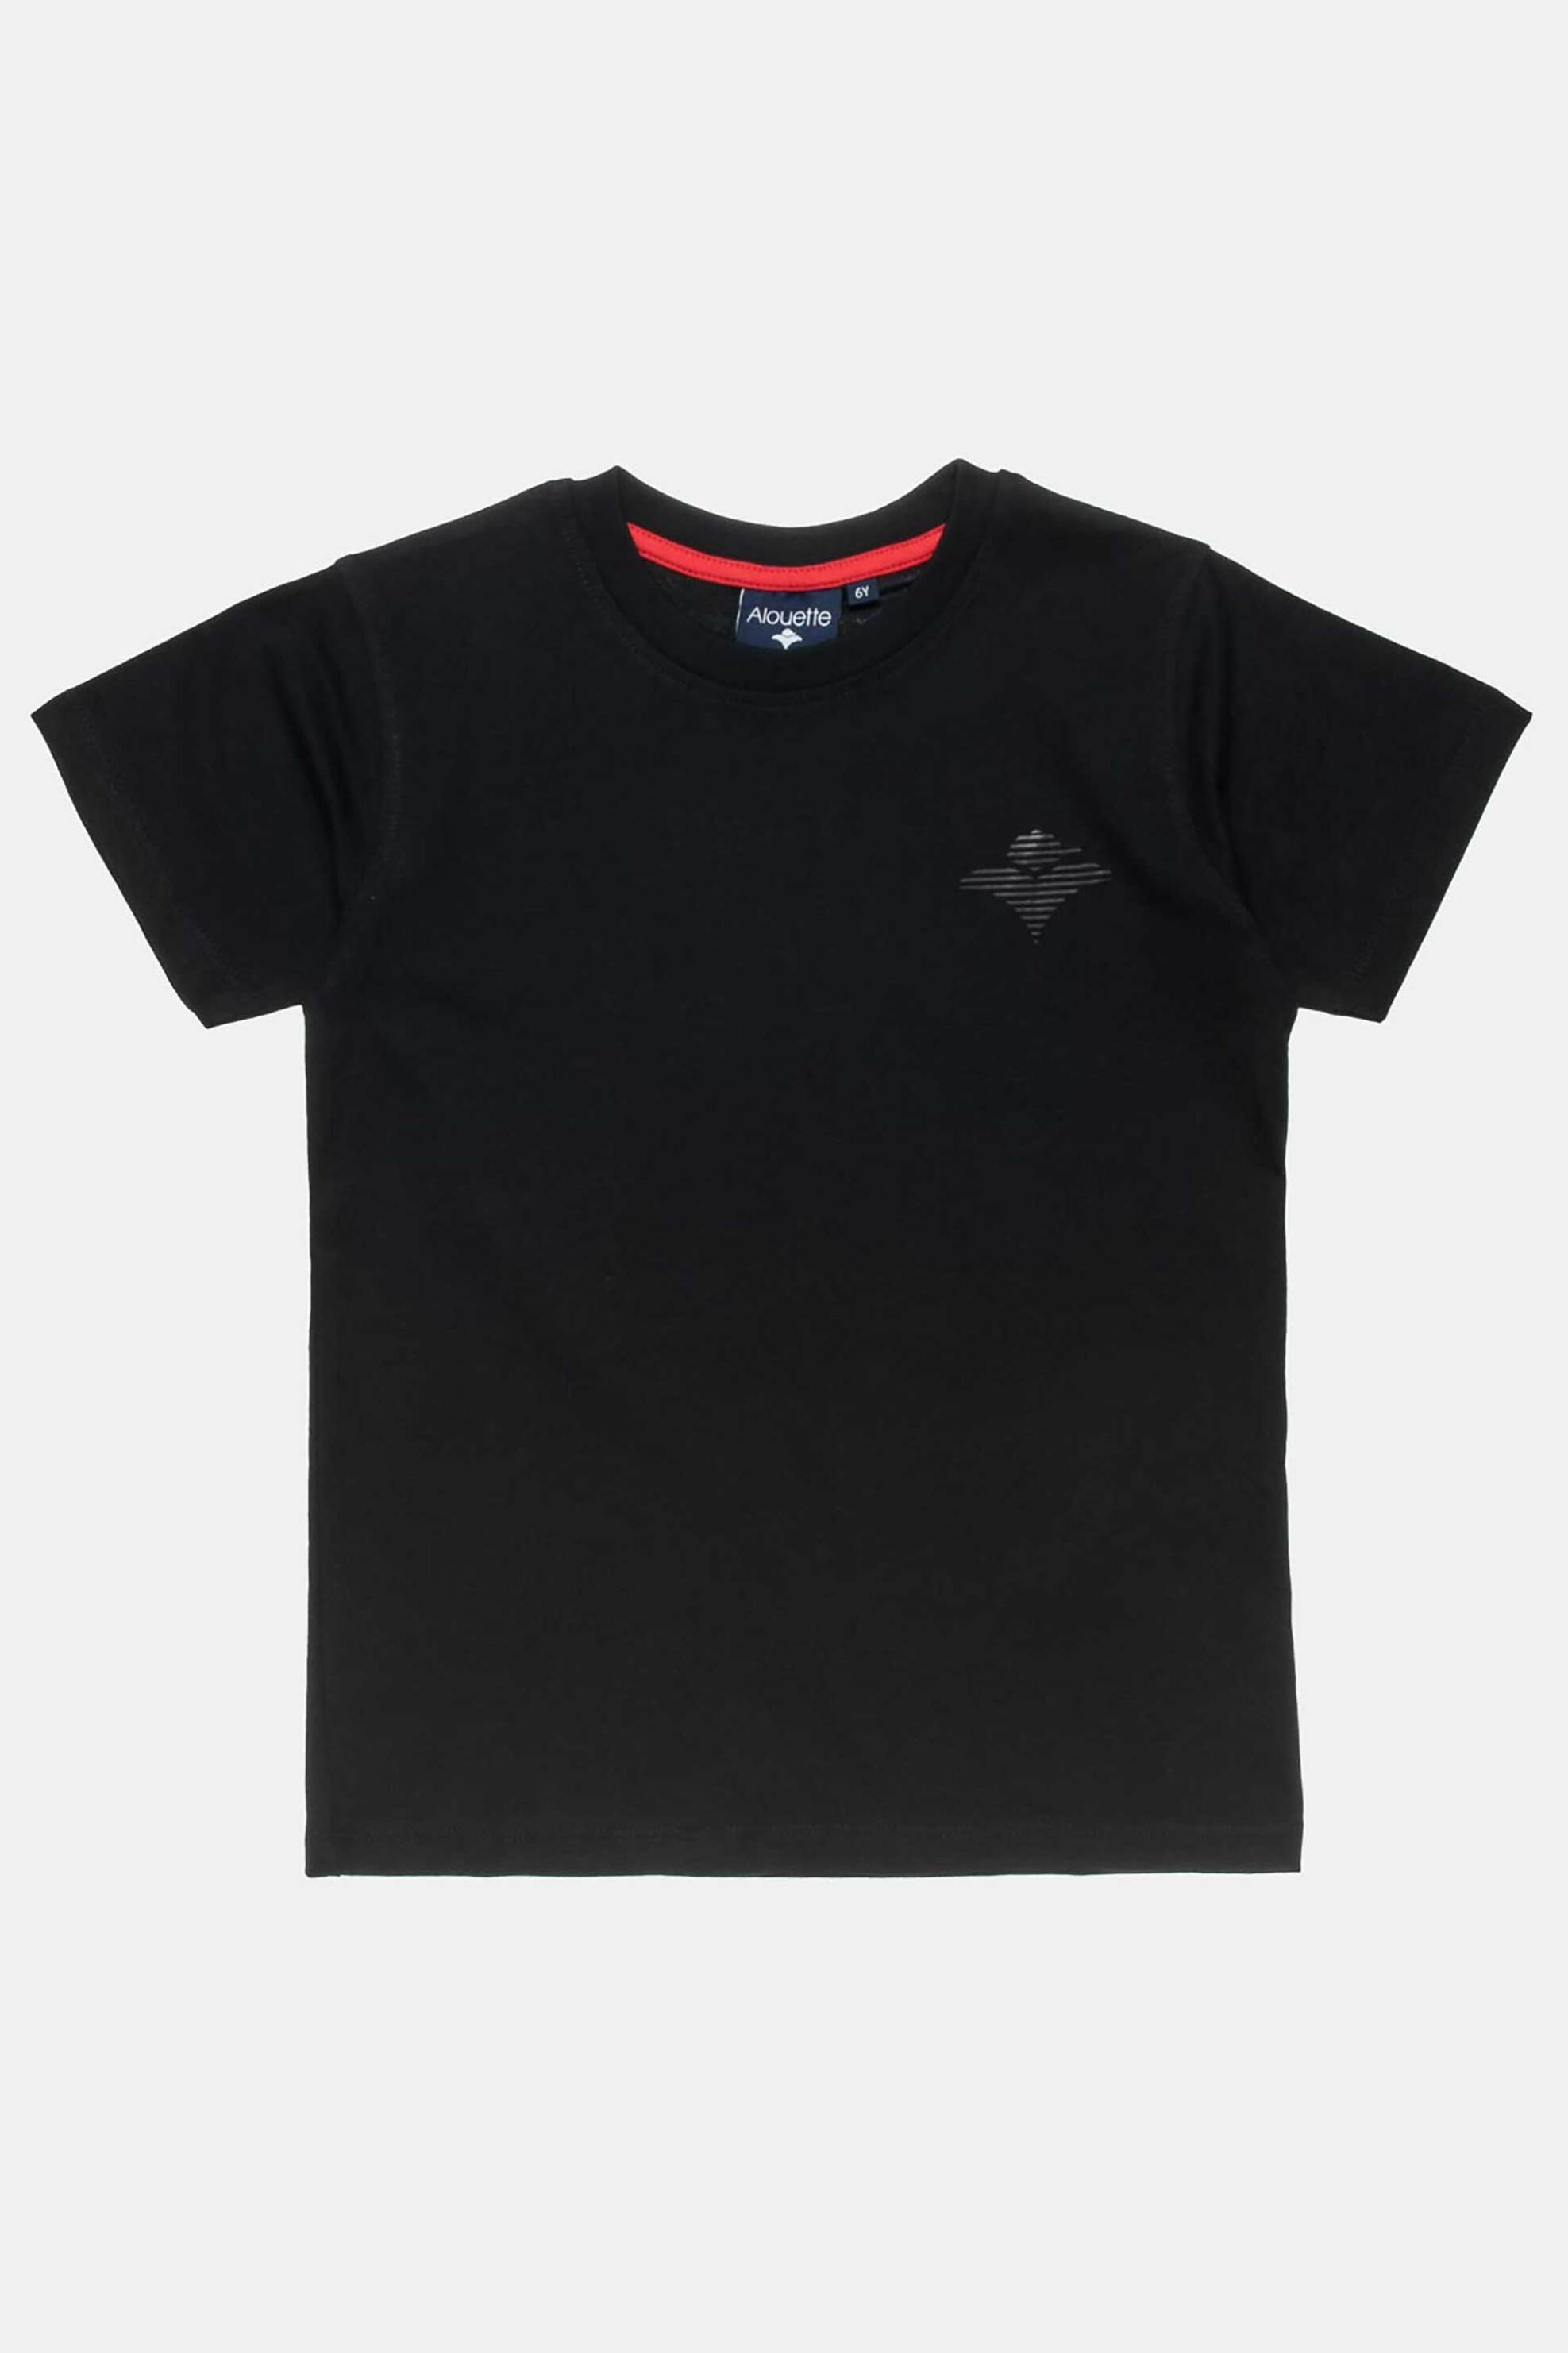 Alouette παιδικό T-shirt μονόχρωμο με στρογγυλή λαιμόκοψη - 00952878 Μαύρο